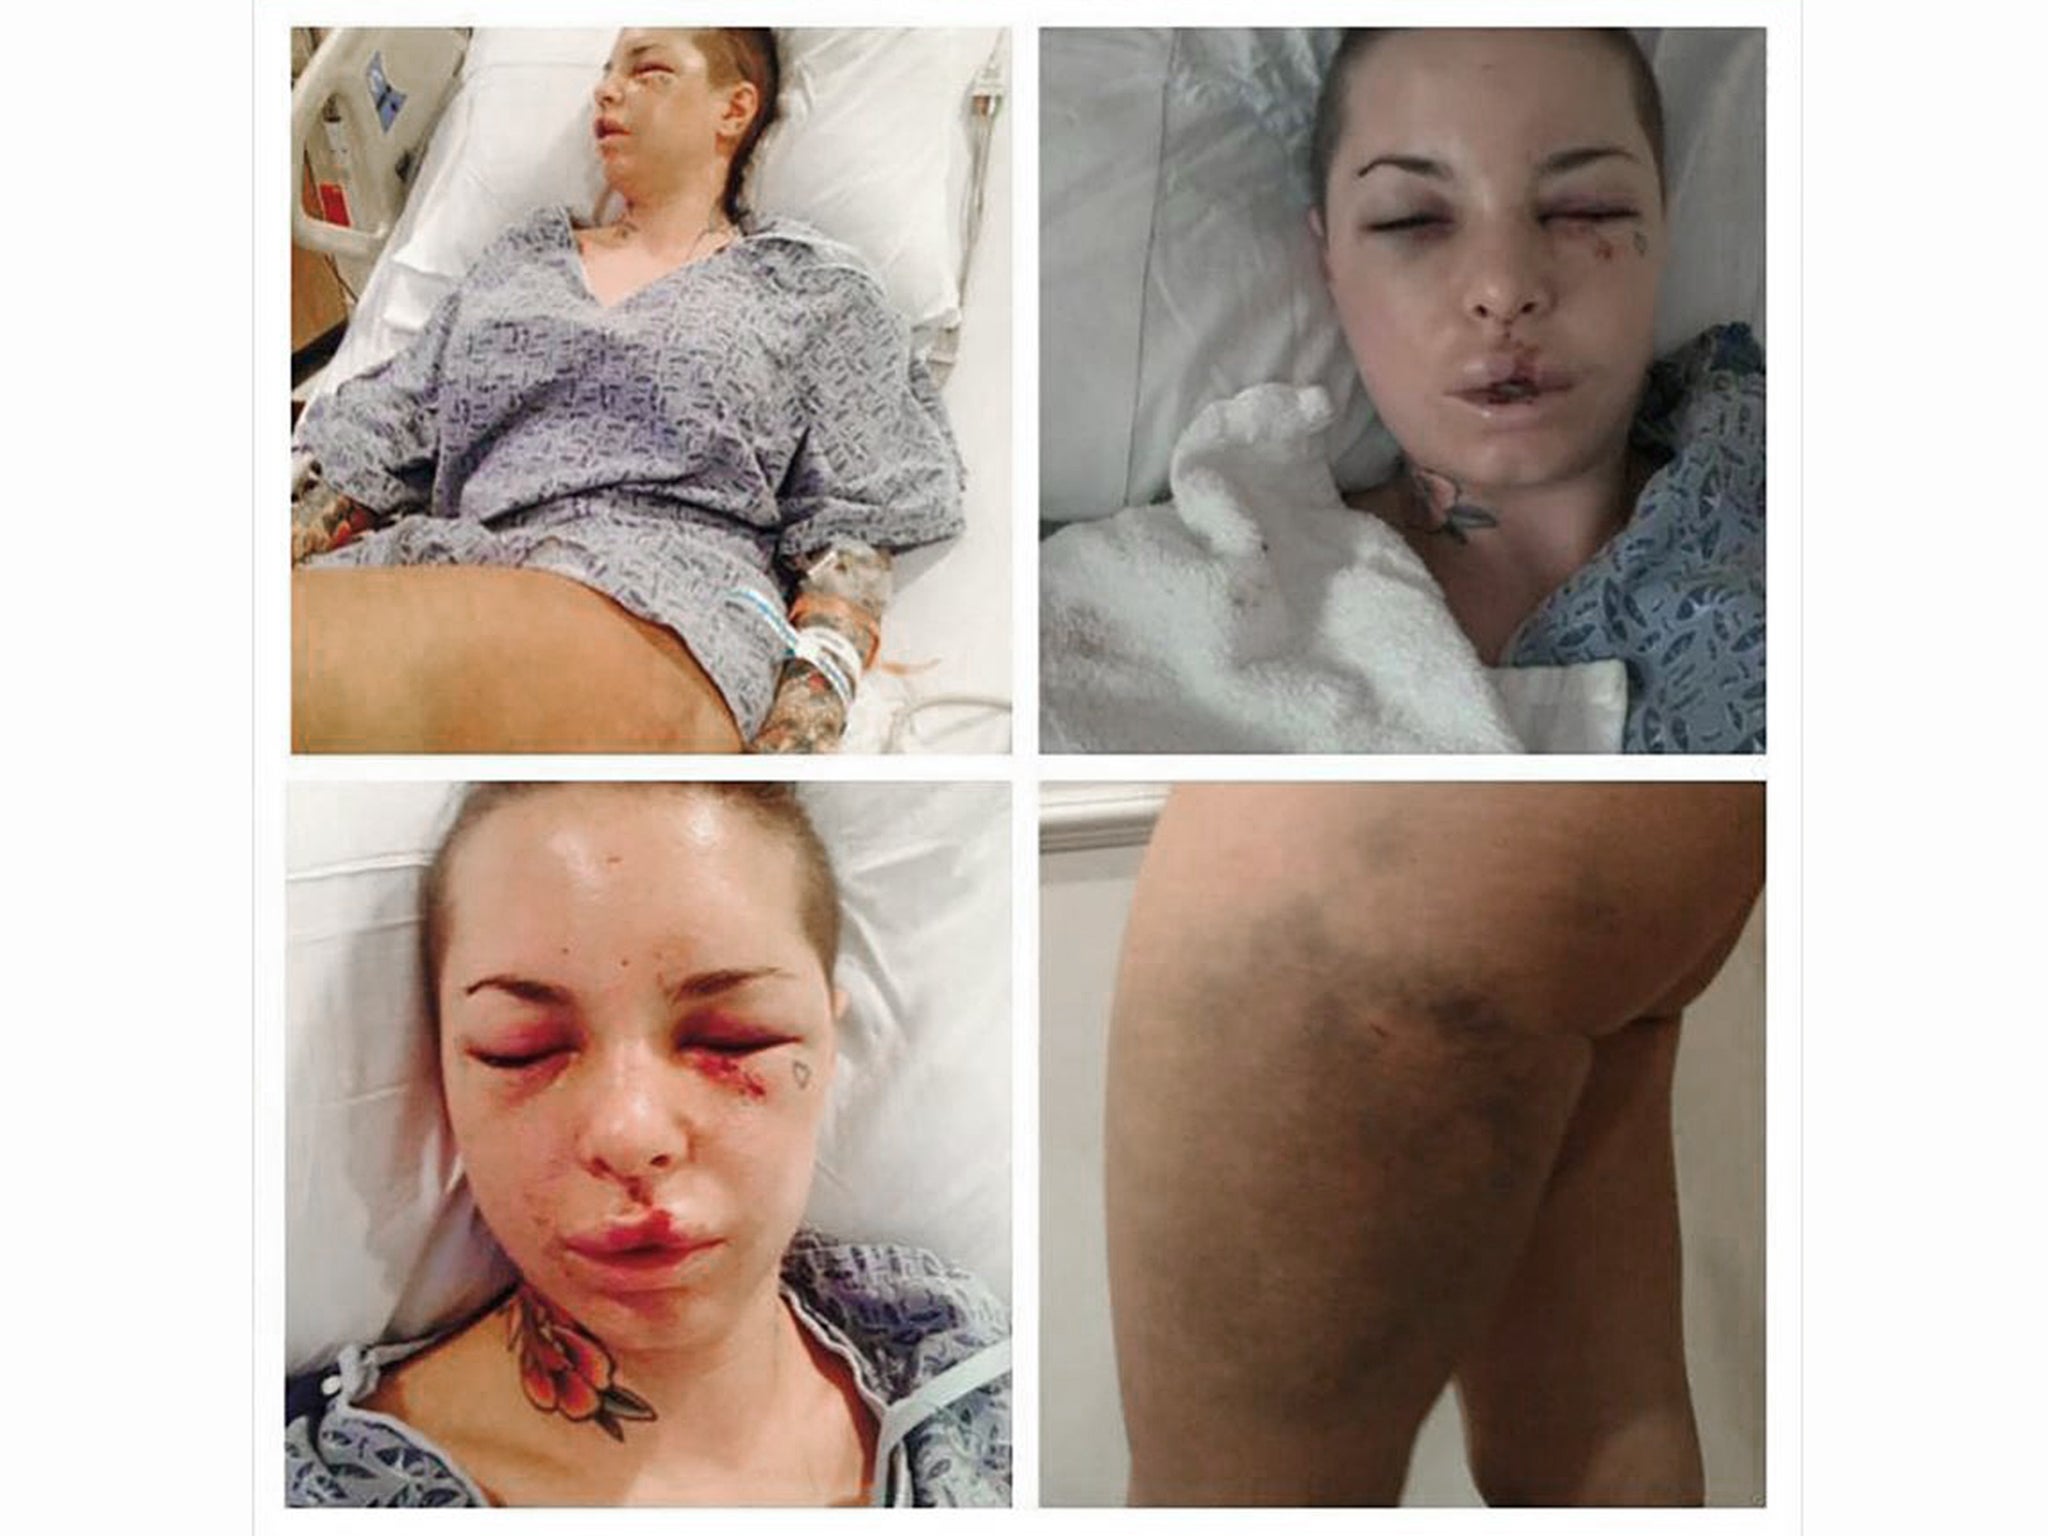 Christy Mack's injuries